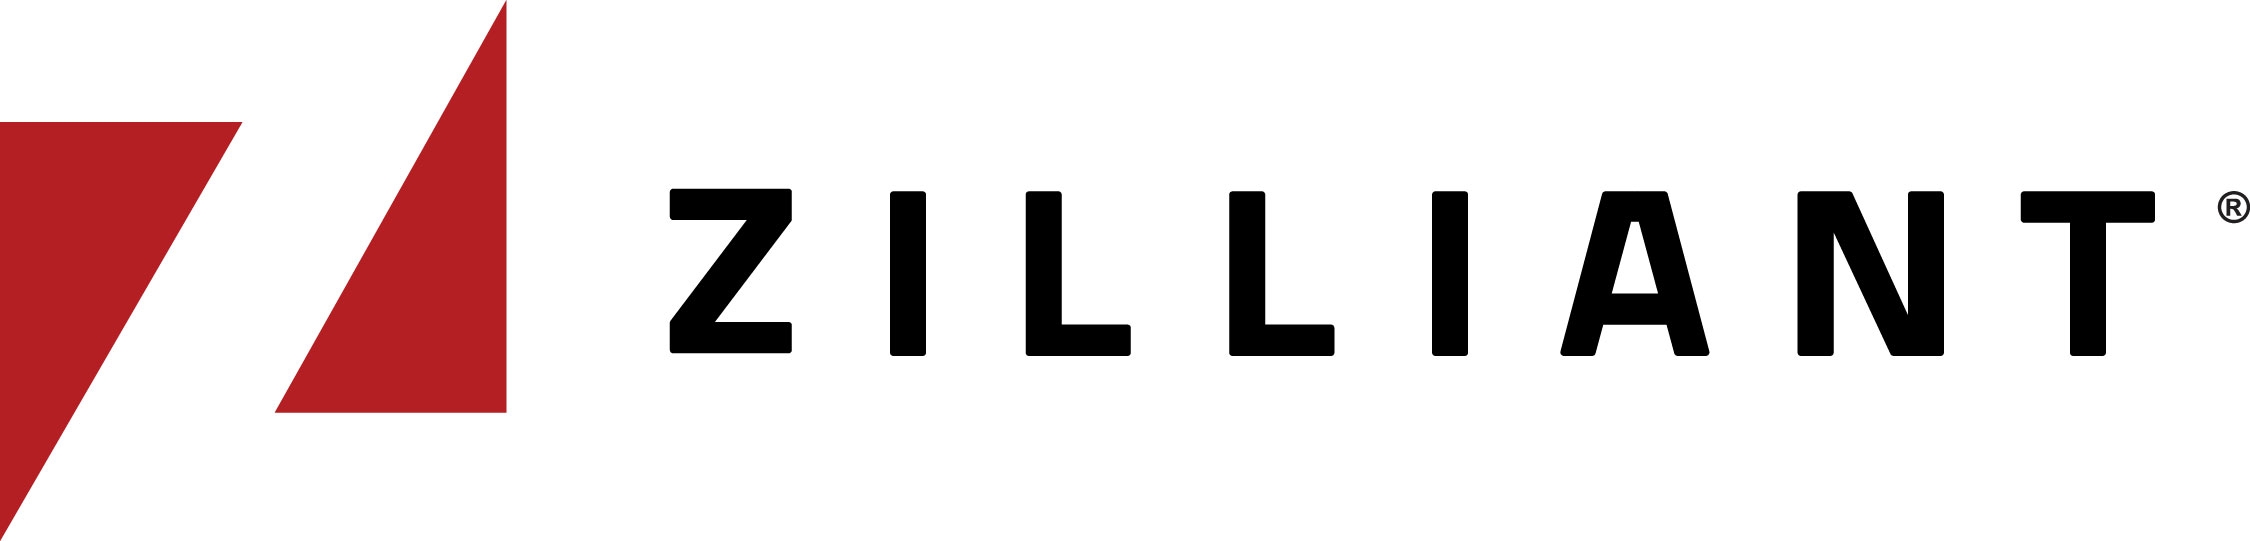 Zilliant Incorporated logo